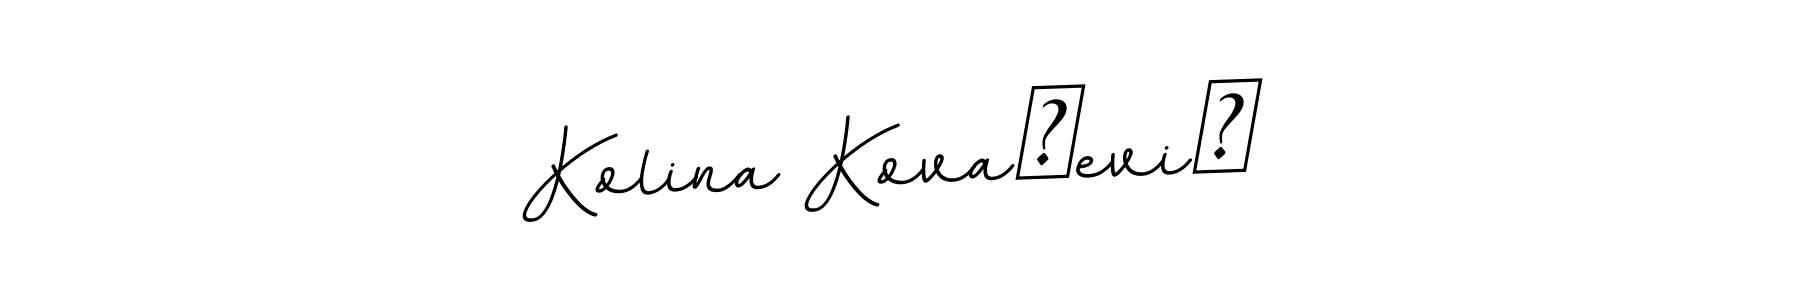 How to Draw Kolina Kovačević signature style? BallpointsItalic-DORy9 is a latest design signature styles for name Kolina Kovačević. Kolina Kovačević signature style 11 images and pictures png